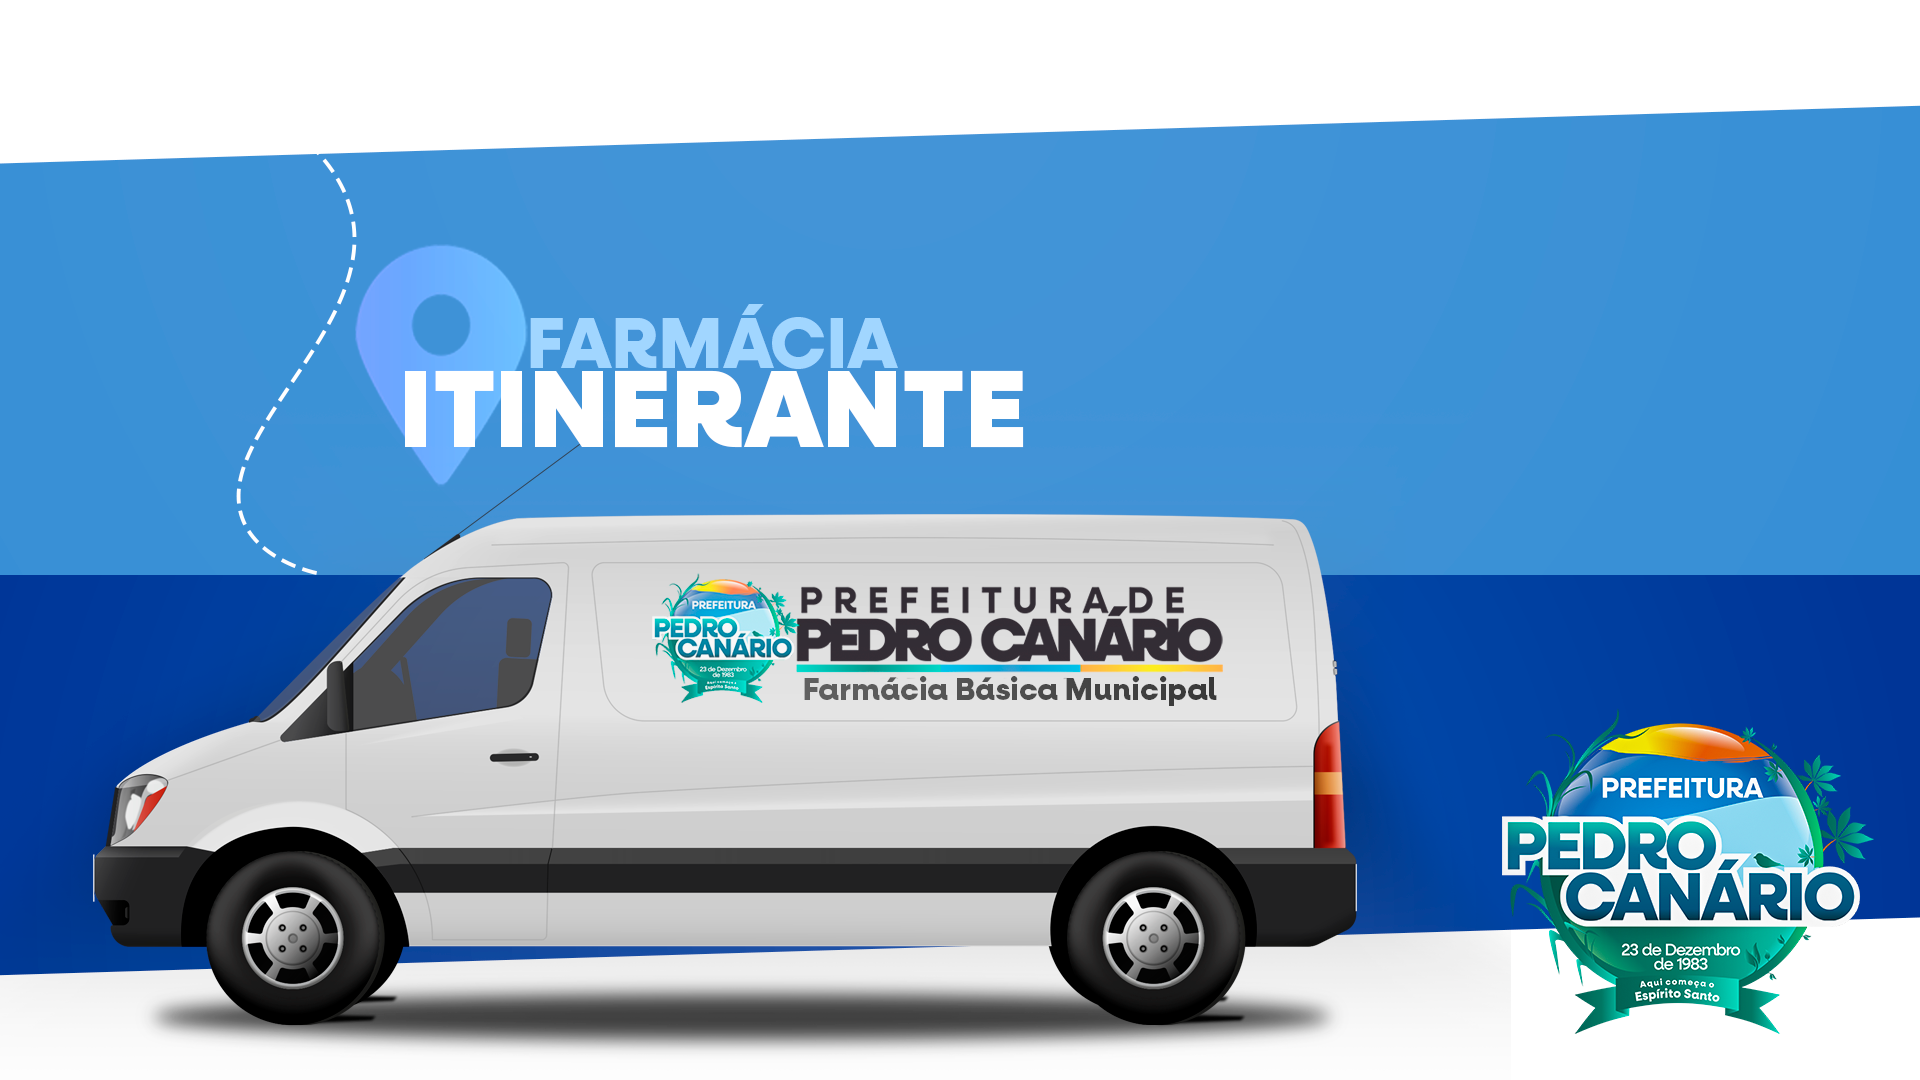 Prefeitura de Pedro Canário lança programa Farmácia Itinerante para beneficiar moradores dos distritos 